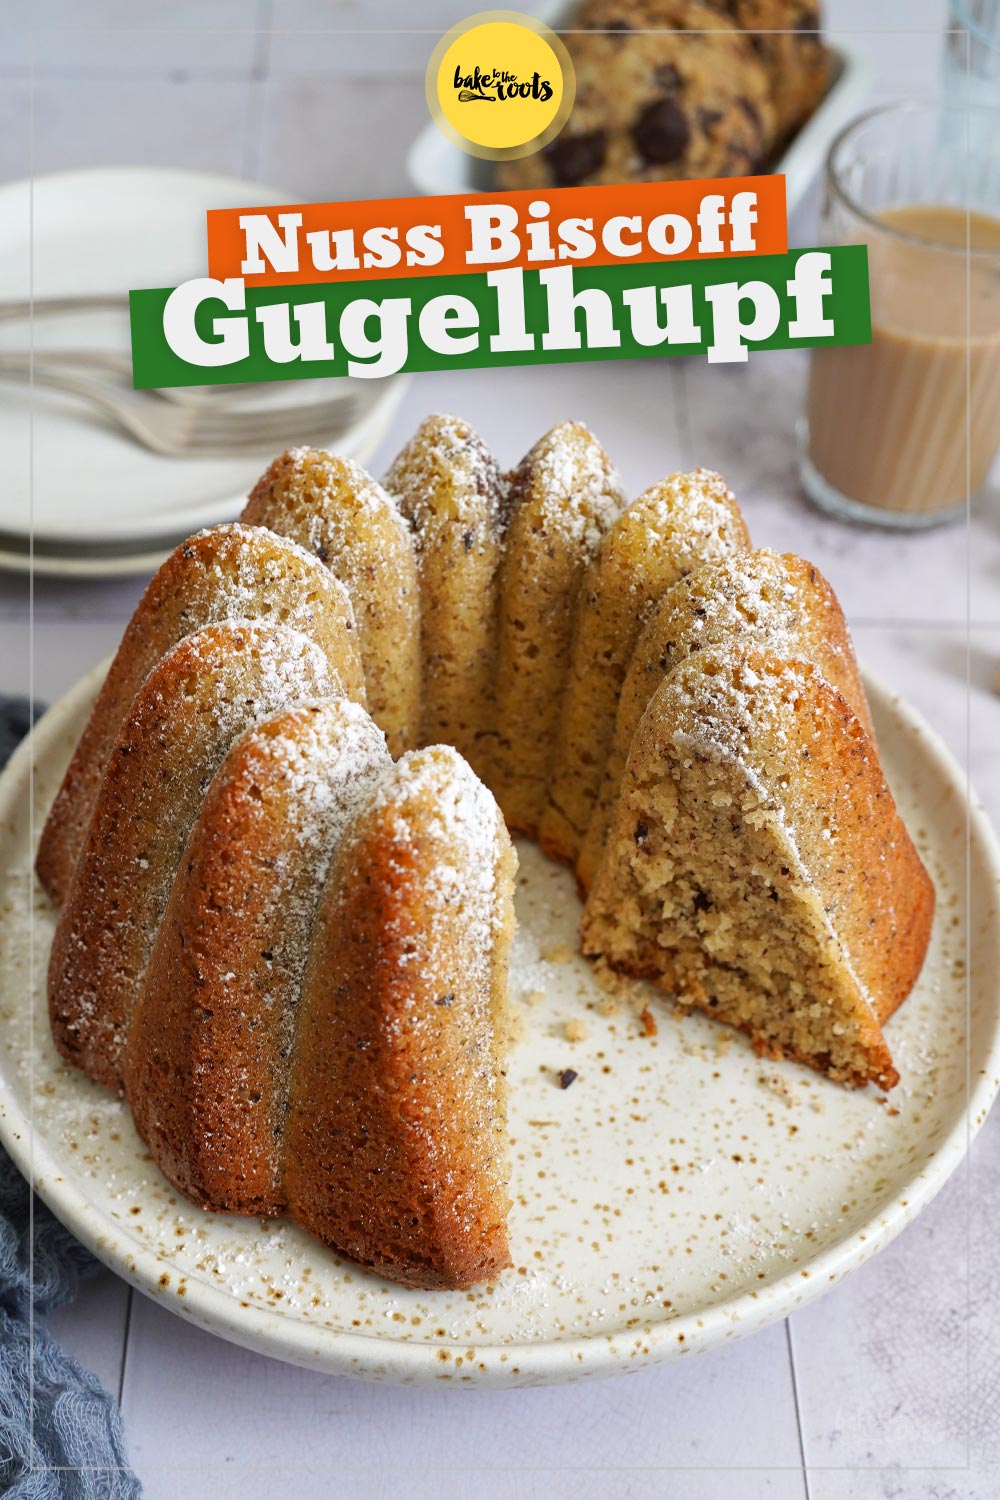 Nuss Biscoff Gugelhupf | Bake to the roots